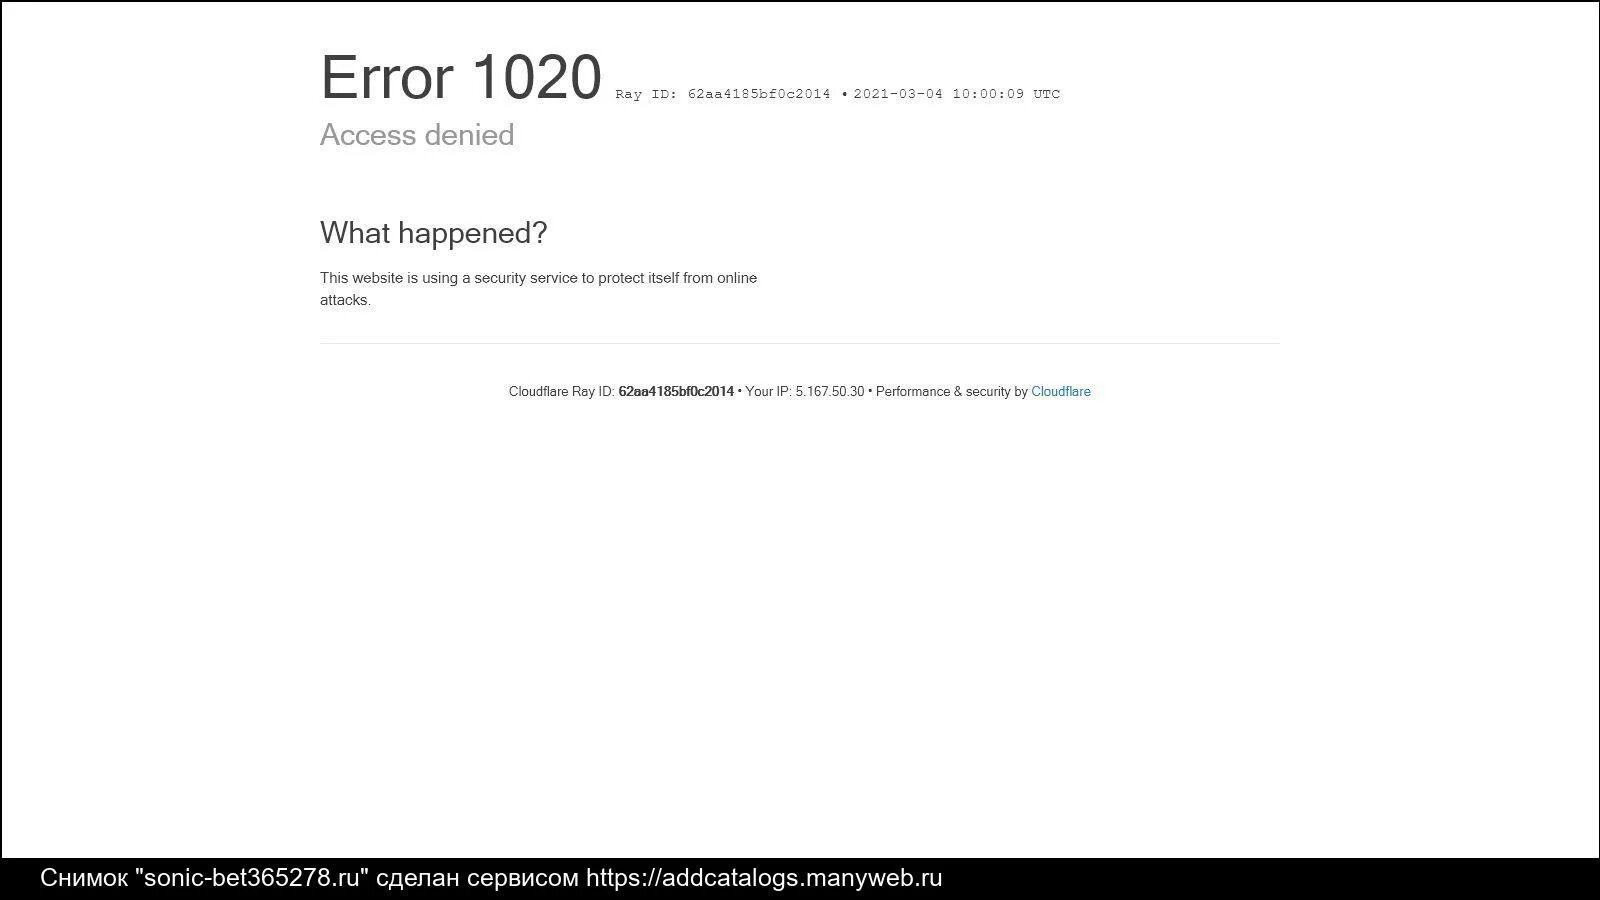 Https youtube com t restricted access 2. 1009 Ошибка. Cloudflare access denied. Access denied перевод на русский. КИНОПОИСК ошибка 1009.